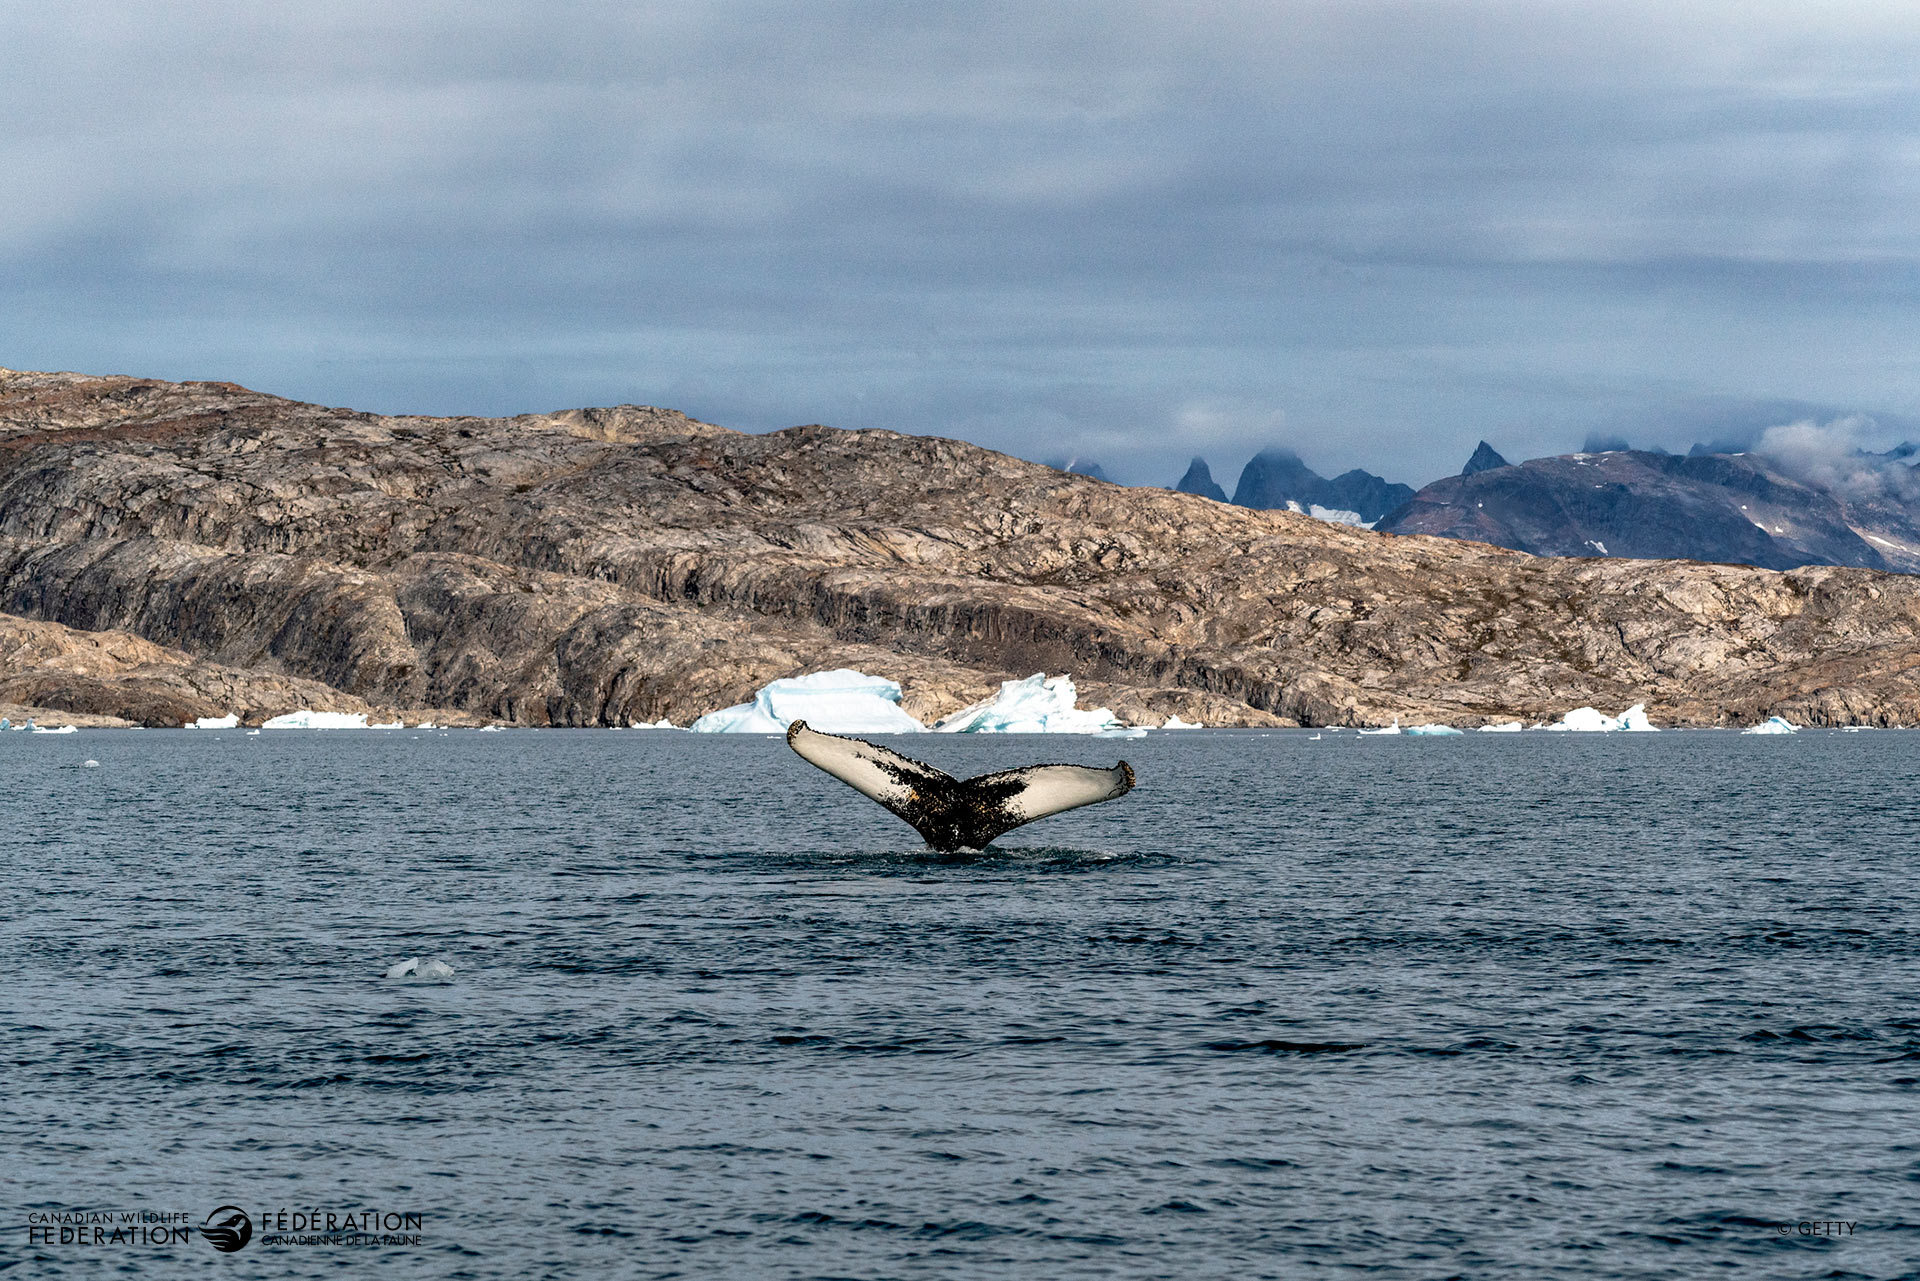 North Atlantic Right Whale near Greenland